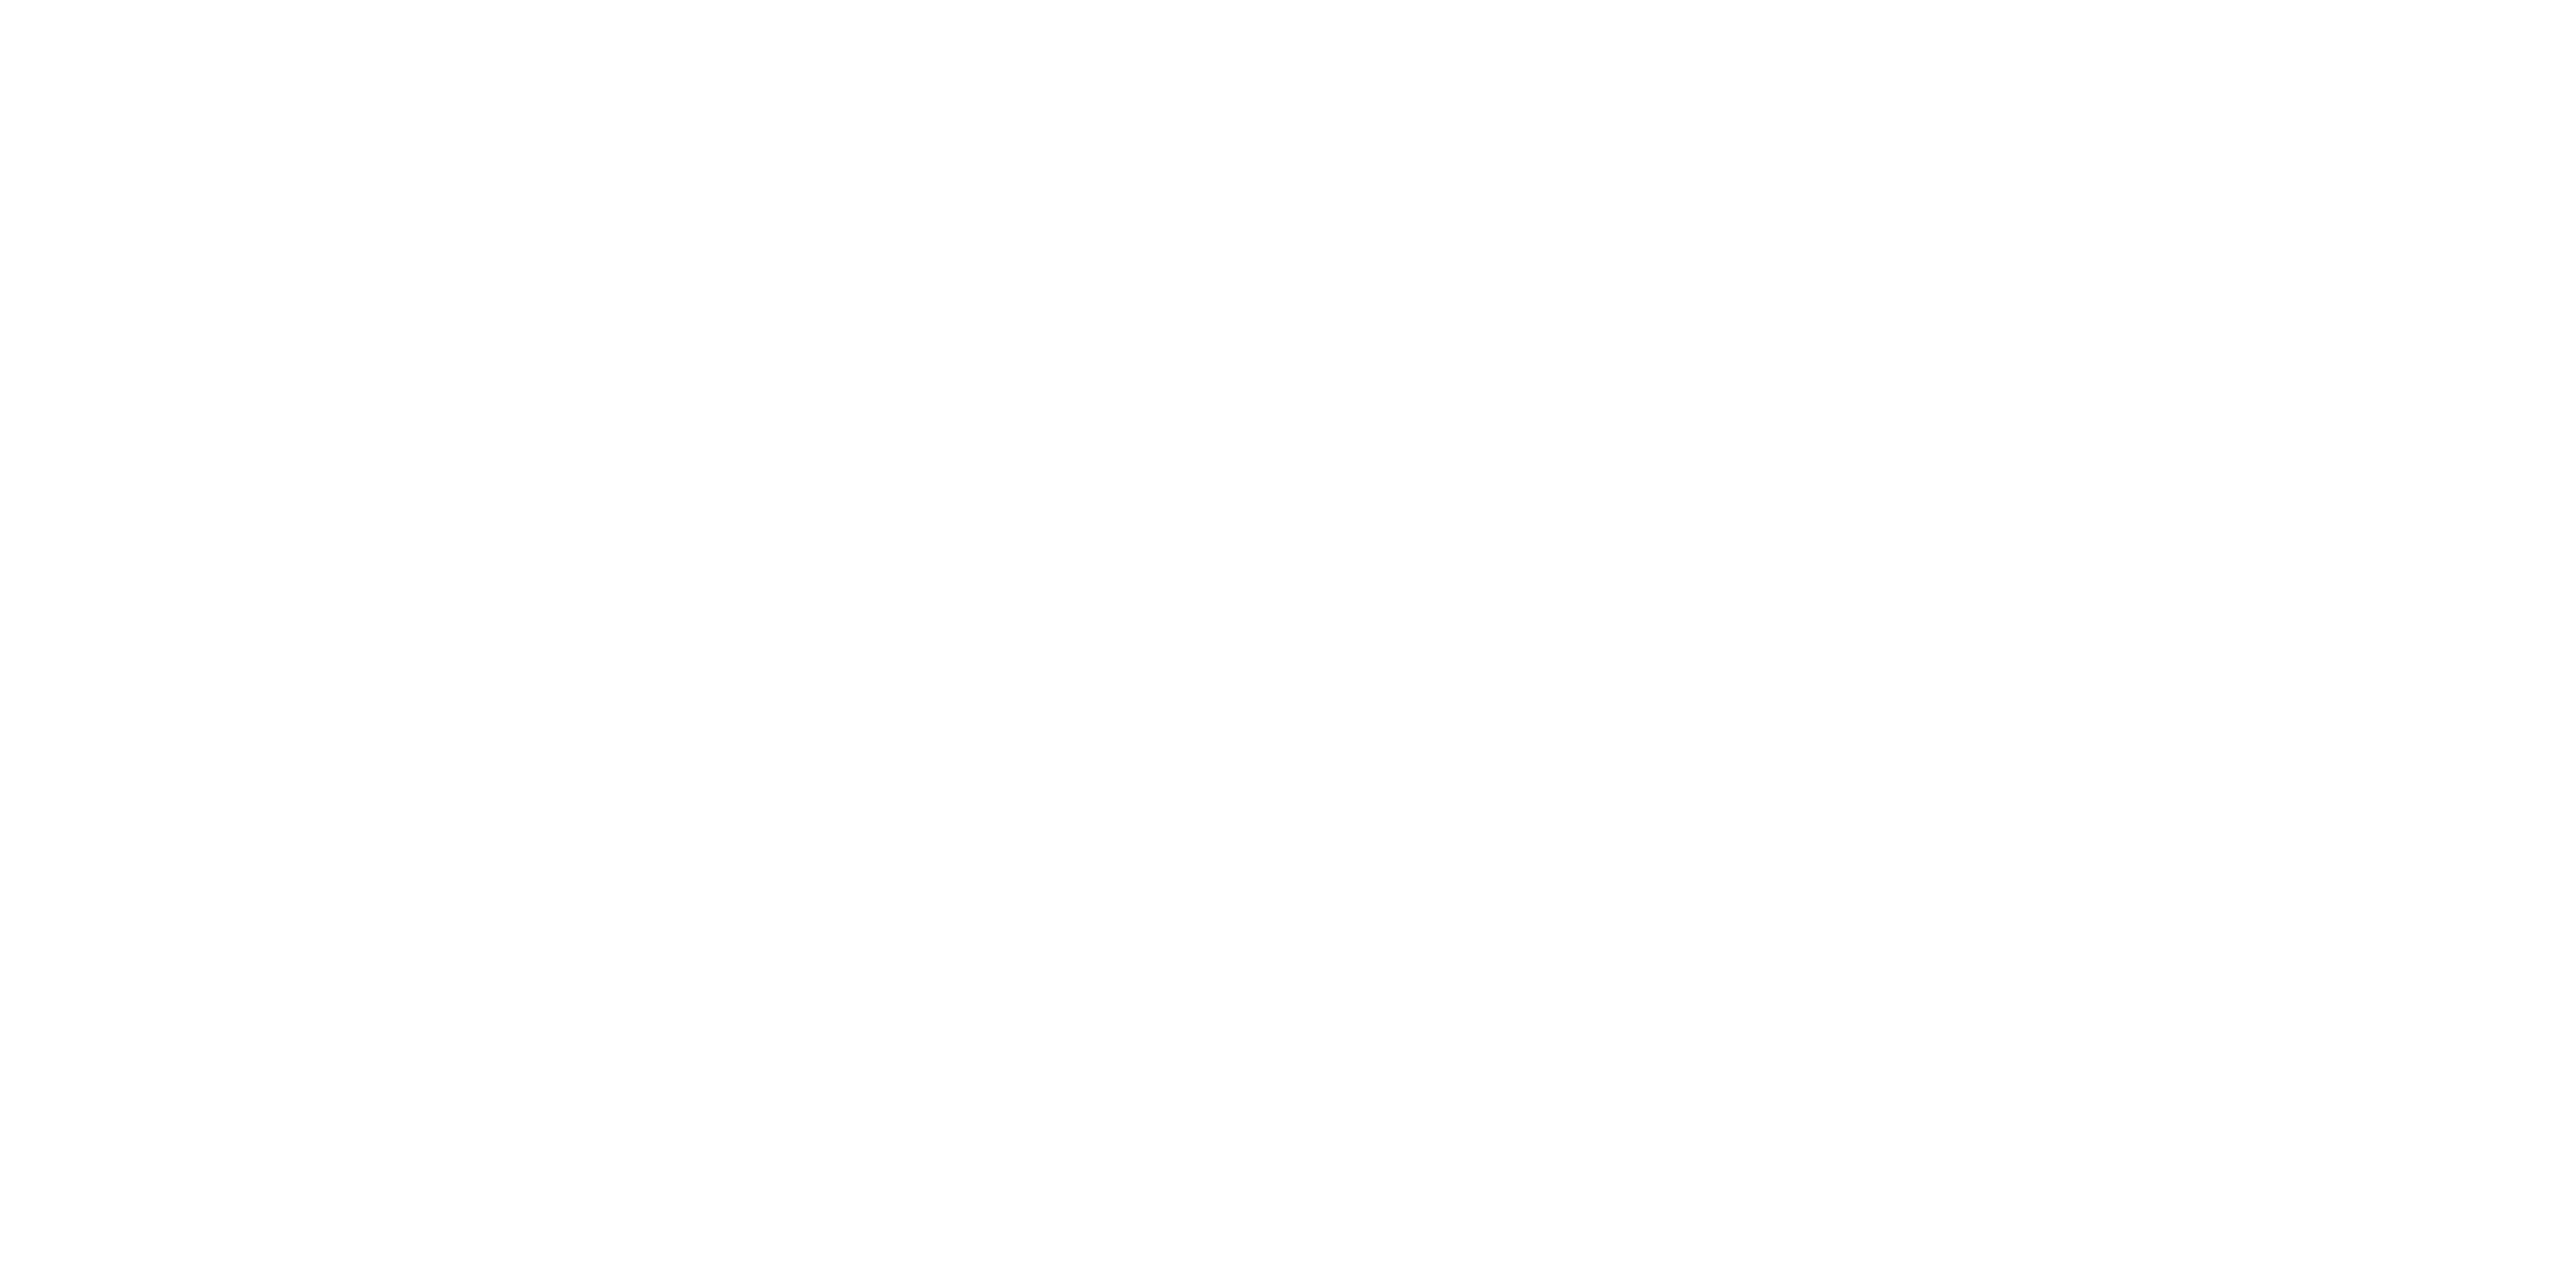 Starlet Hotel Jakarta Airport logo